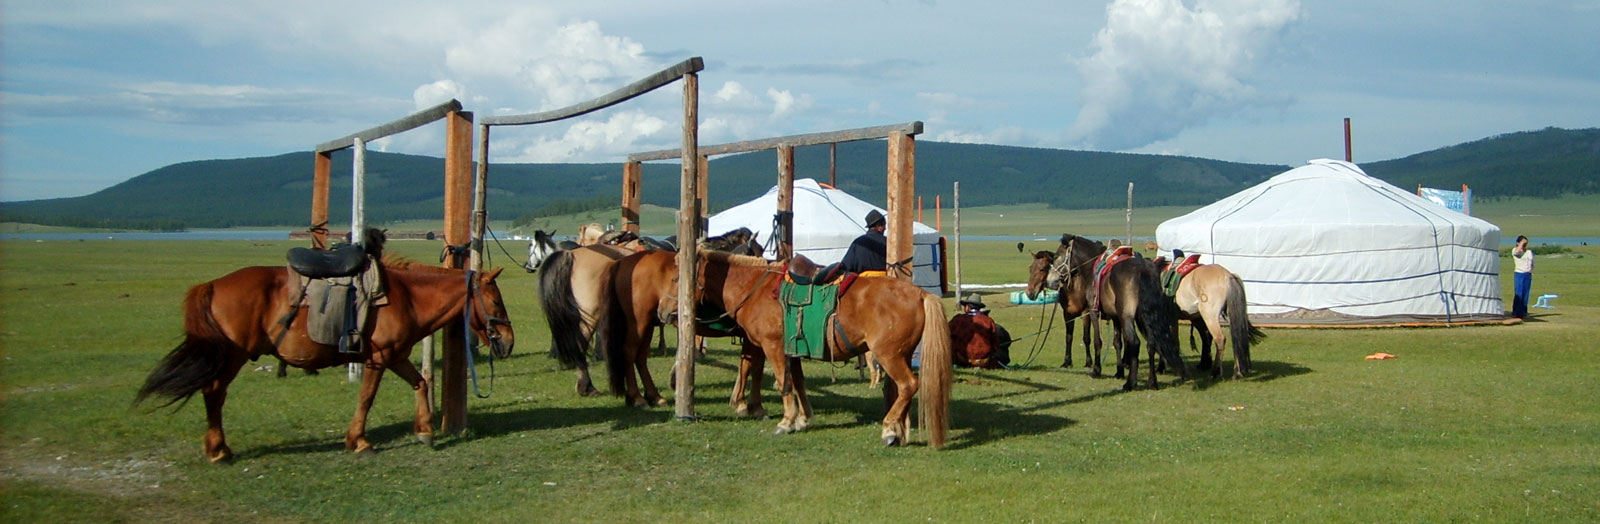 Angebundene Pferde in der Mongolei